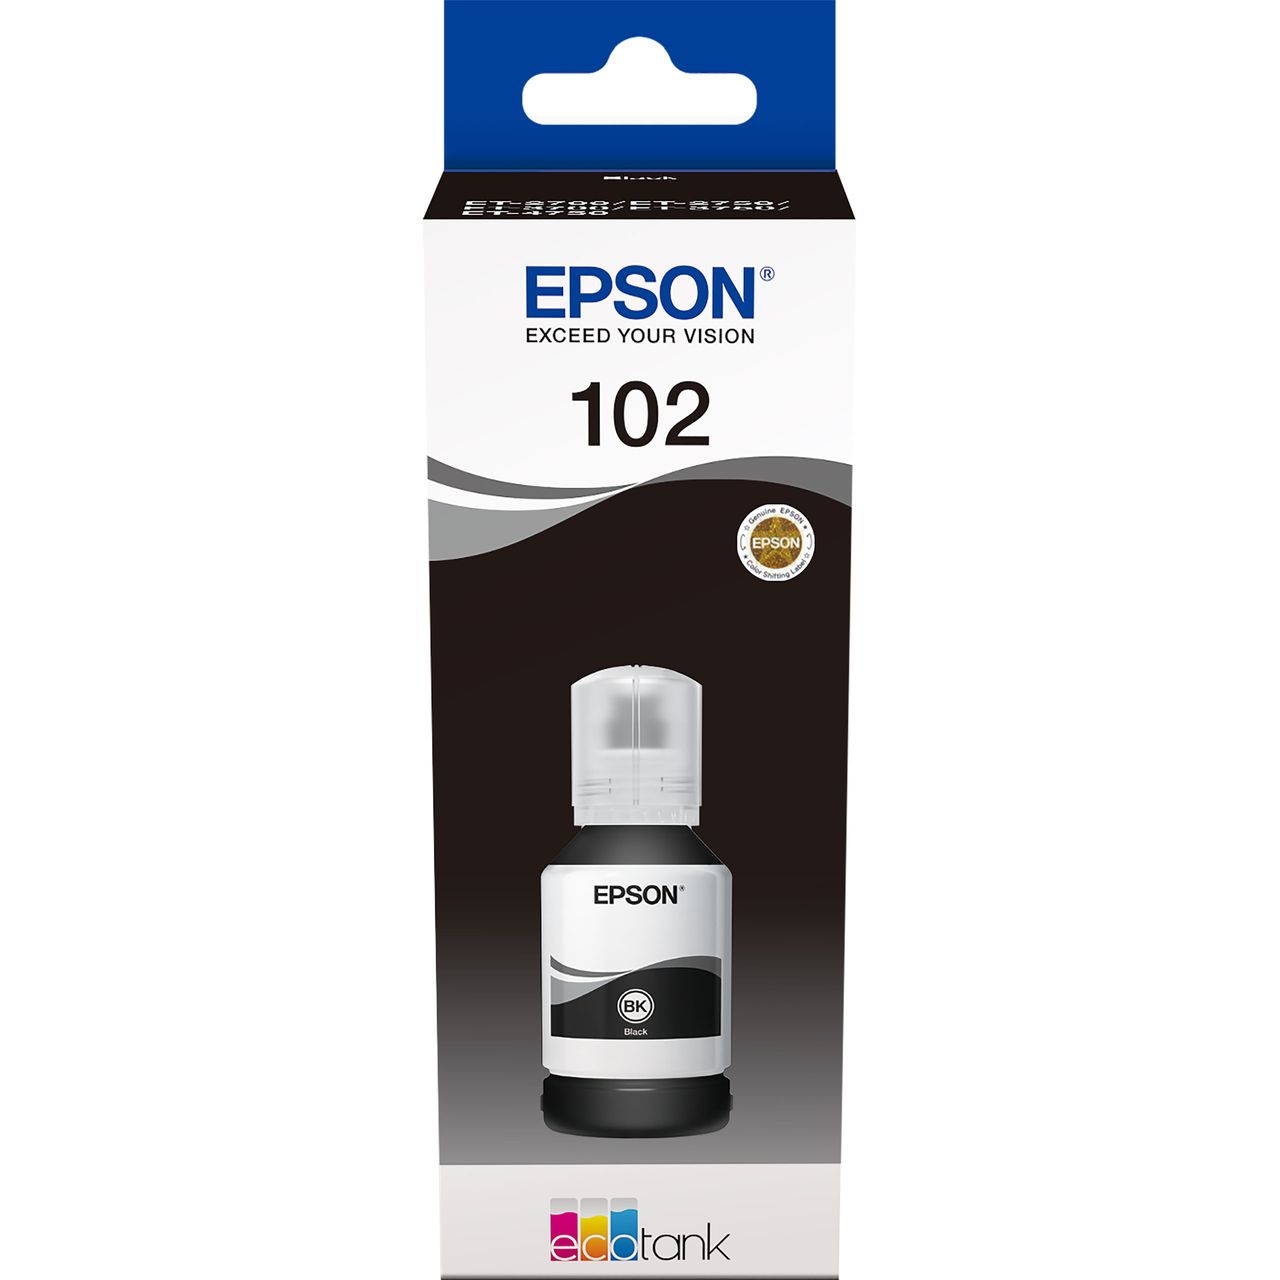 Epson 102 EcoTank Black Ink Bottle Review